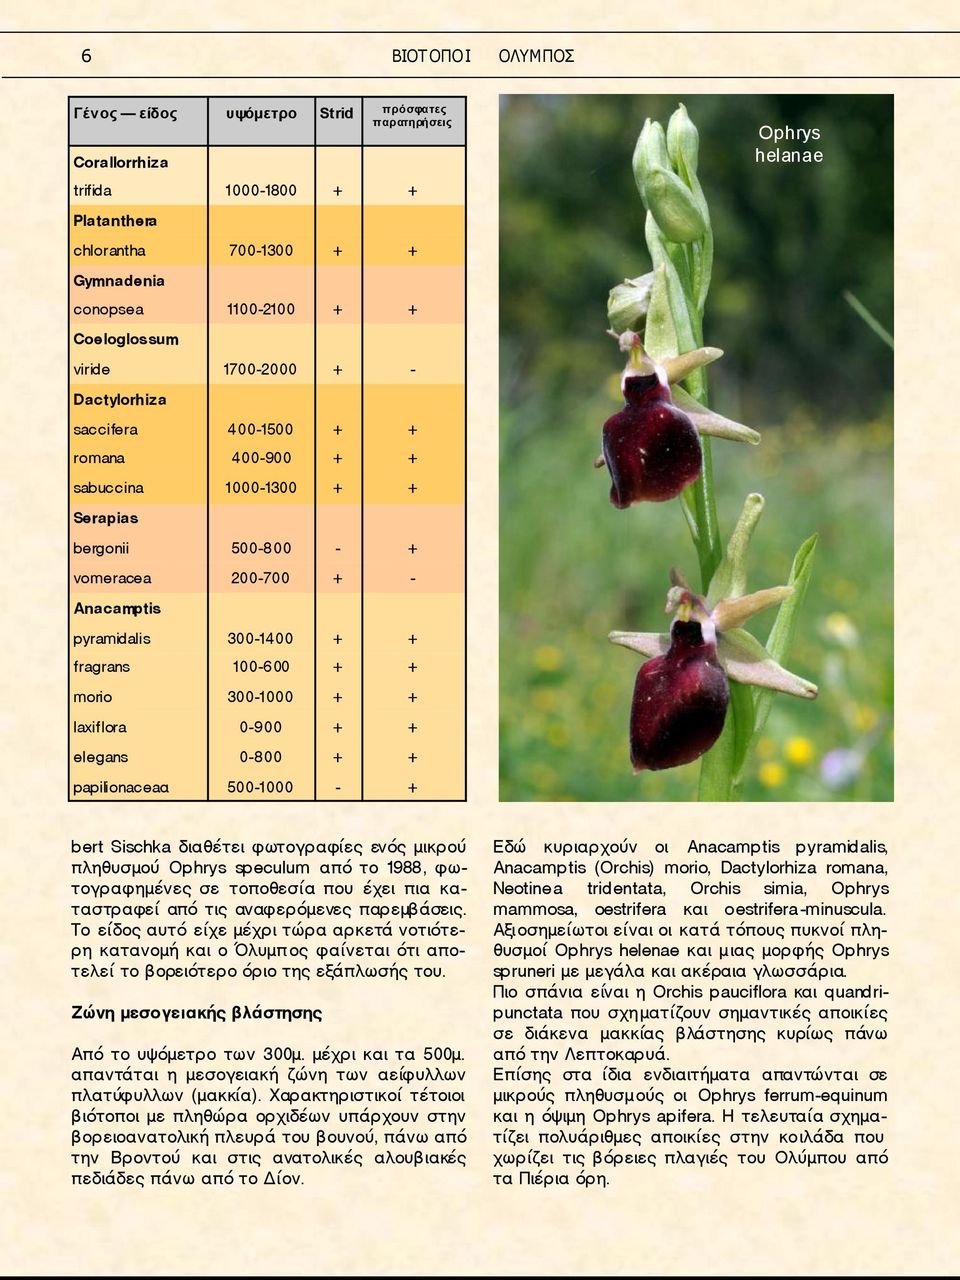 + fragrans 100-600 + + morio 300-1000 + + laxiflora 0-900 + + elegans 0-800 + + papilionaceaα 500-1000 - + bert Sischka διαθέτει φωτογραφίες ενός μικρού πληθυσμού Ophrys speculum από το 1988,